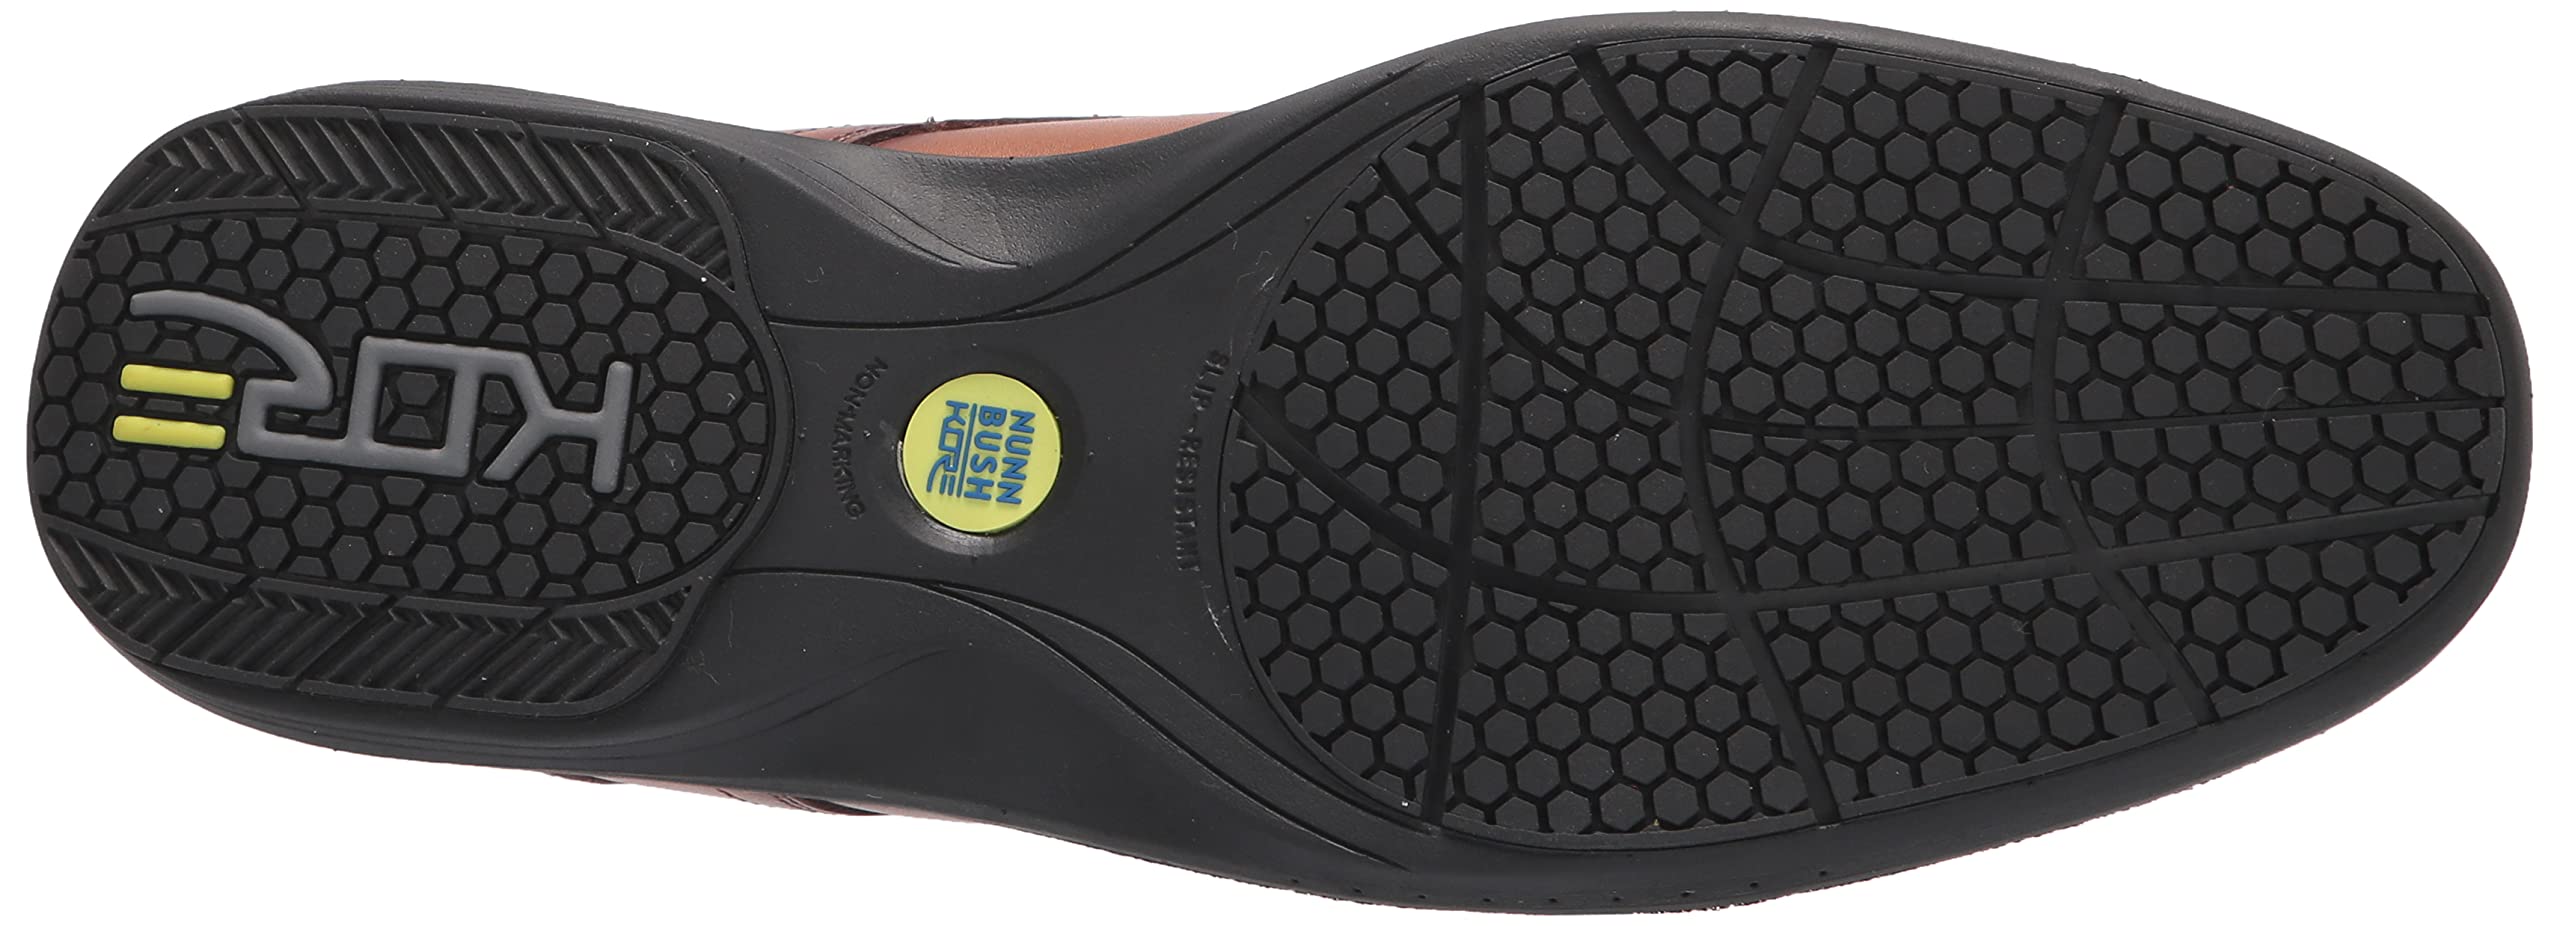 Nunn Bush Men's Pro Bicycle Toe Slip-on with Kore Slip Resistant Comfort Technology Loafer